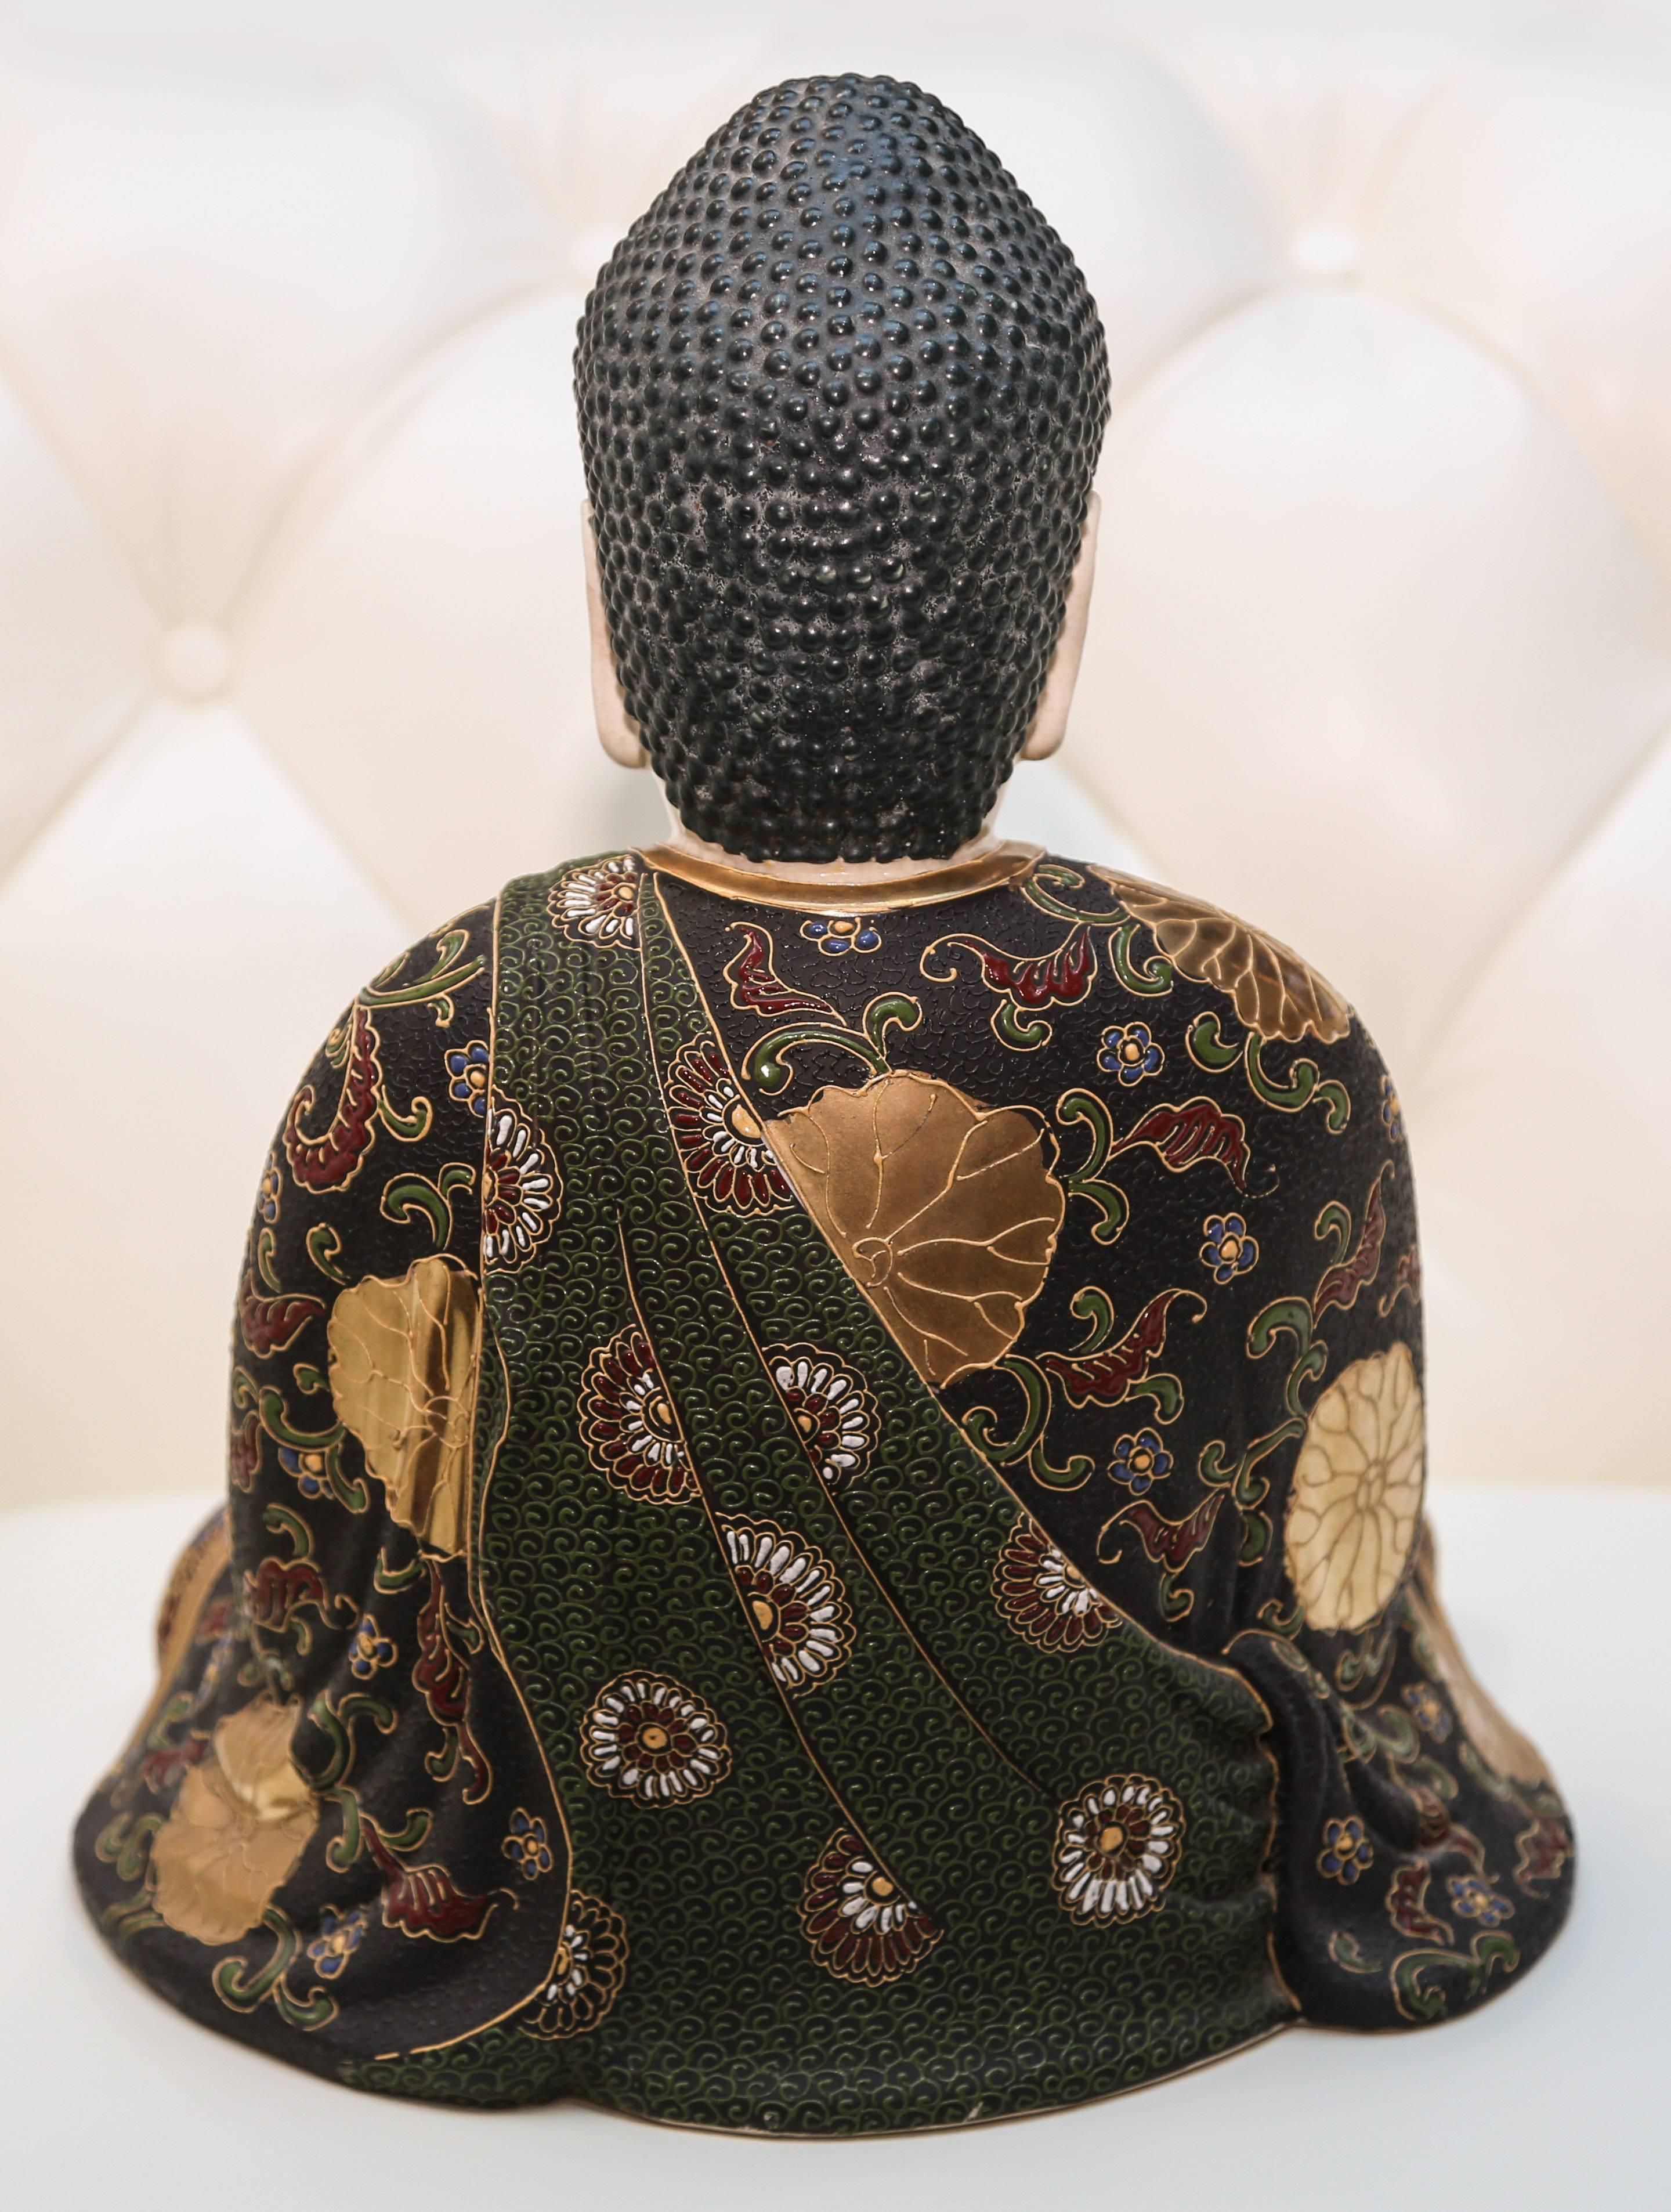 Porcelain Satsuma Figure of Buddha